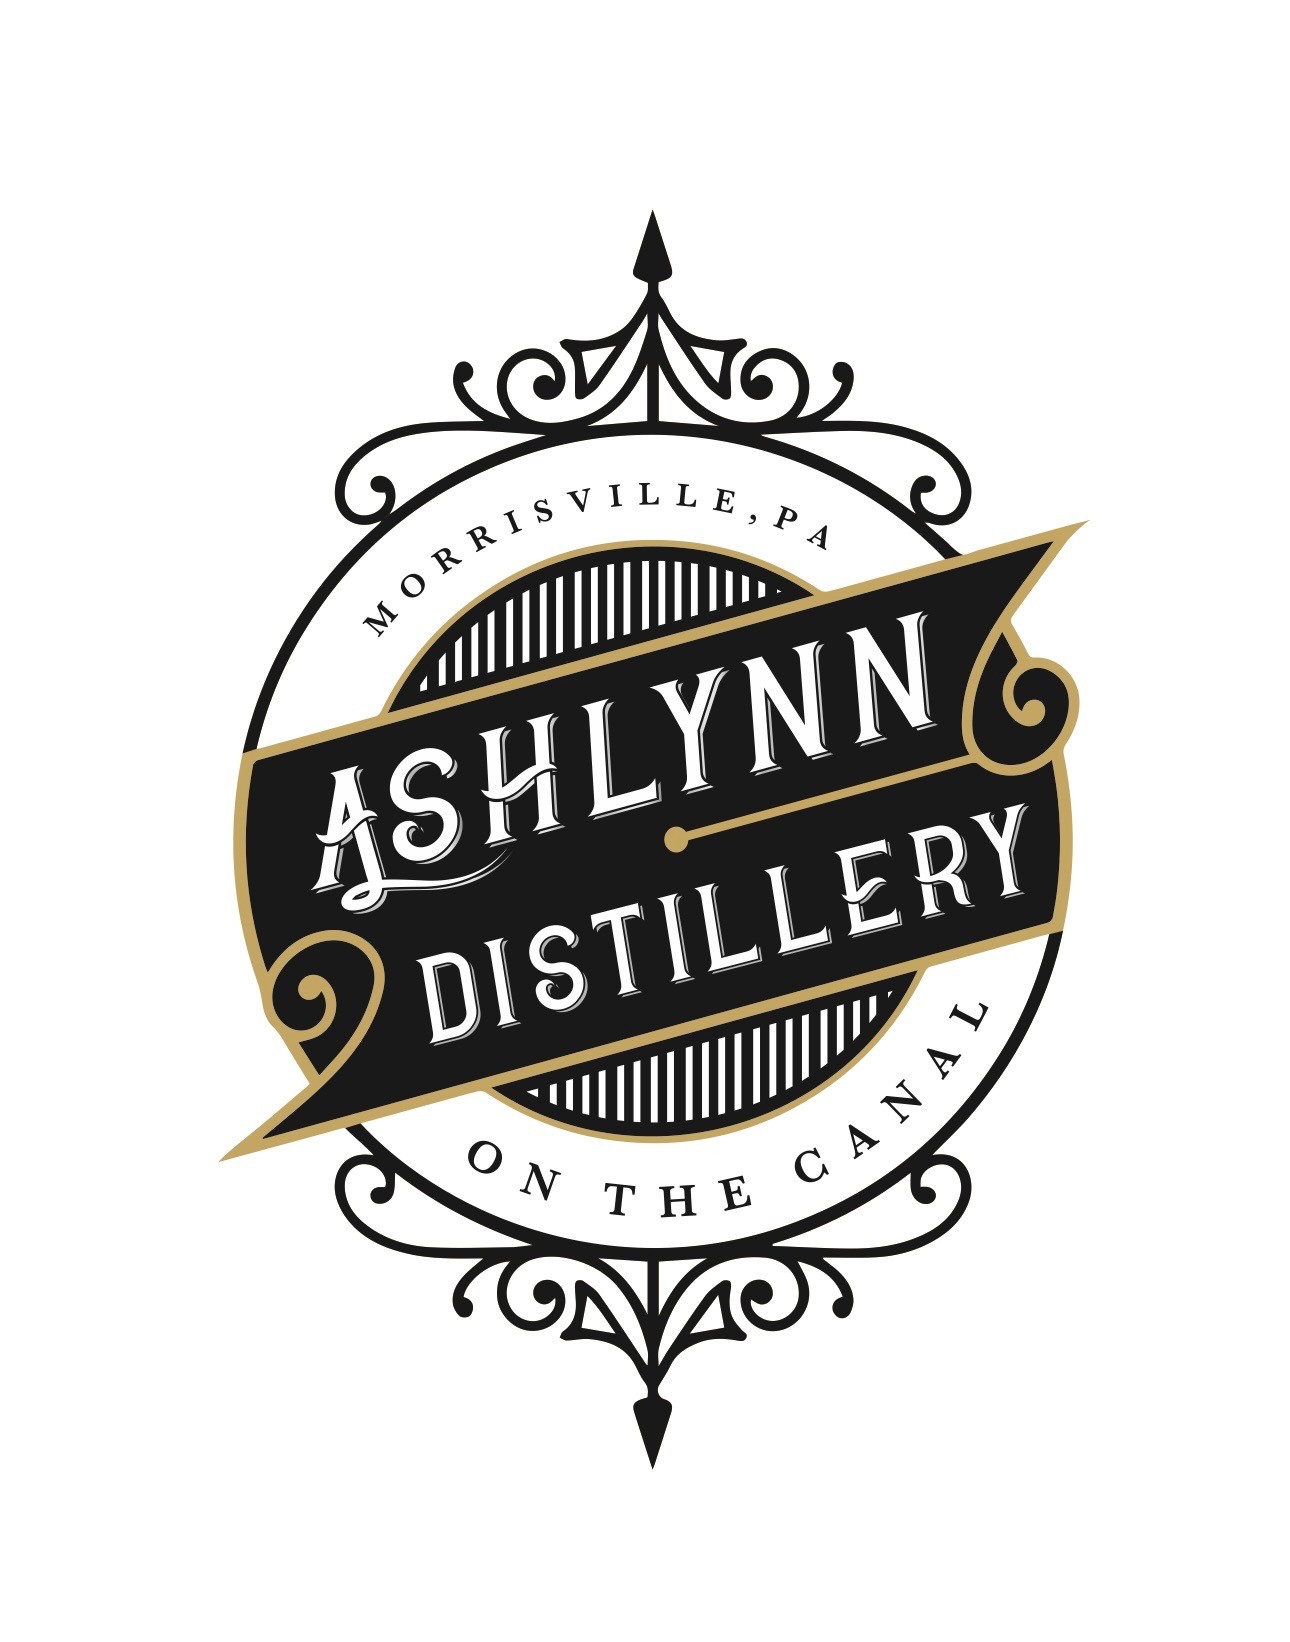 Ashlynn Distillery